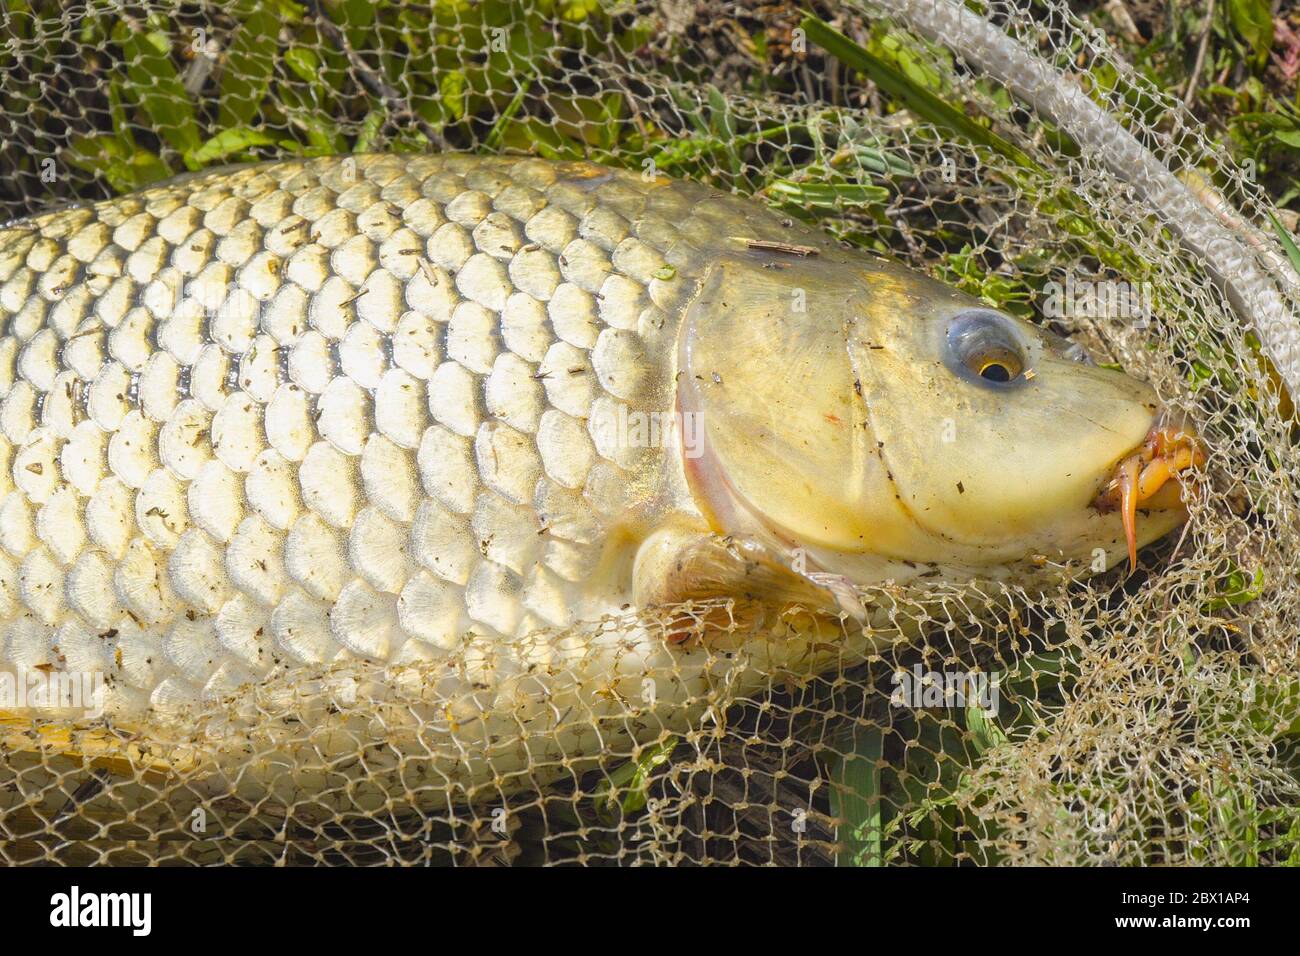 A freshly caught carp in a fishing landing net lies on the grass